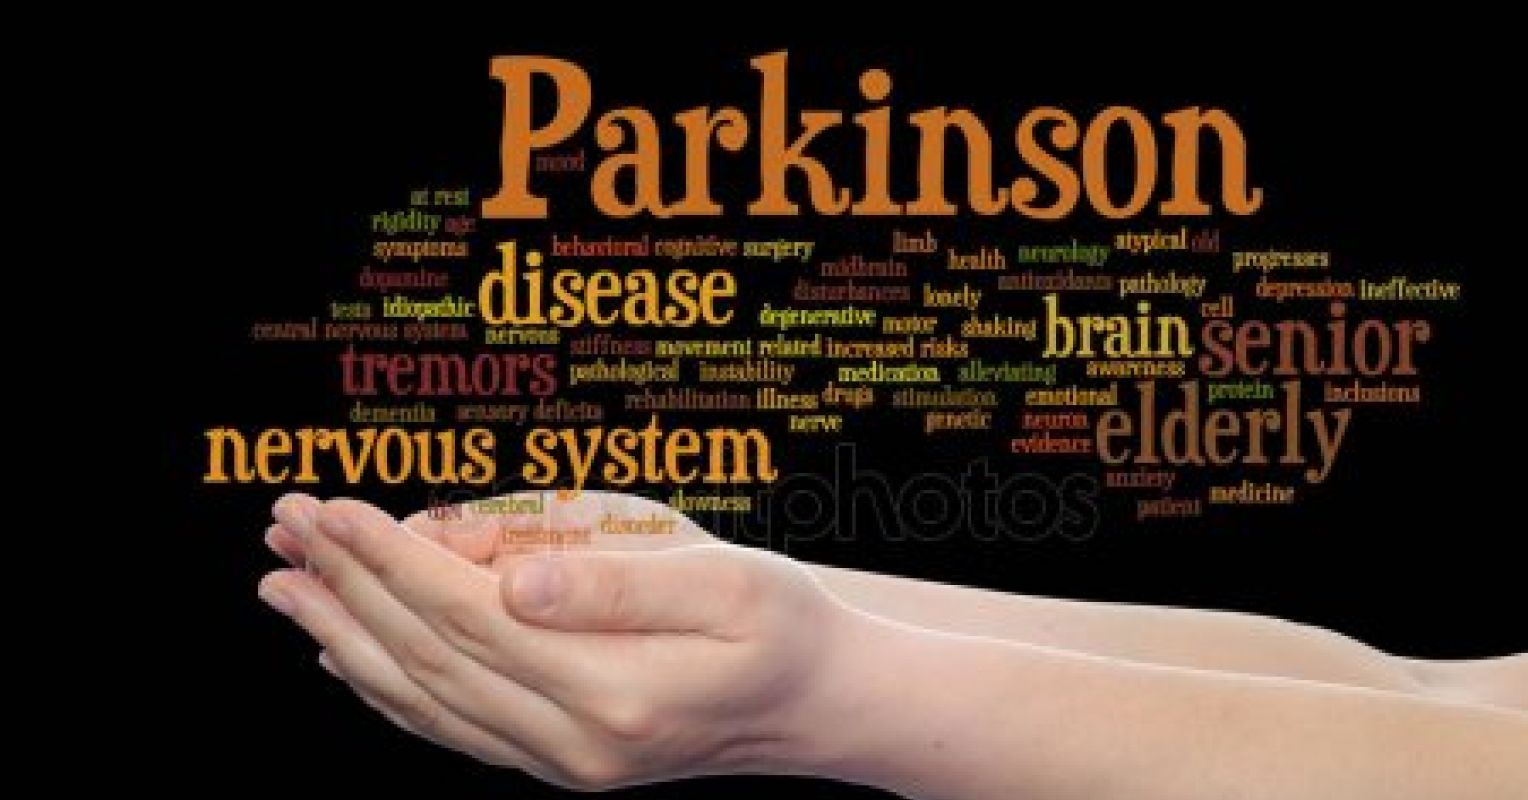 Alan Alda on living with Parkinson's disease: 'I feel good